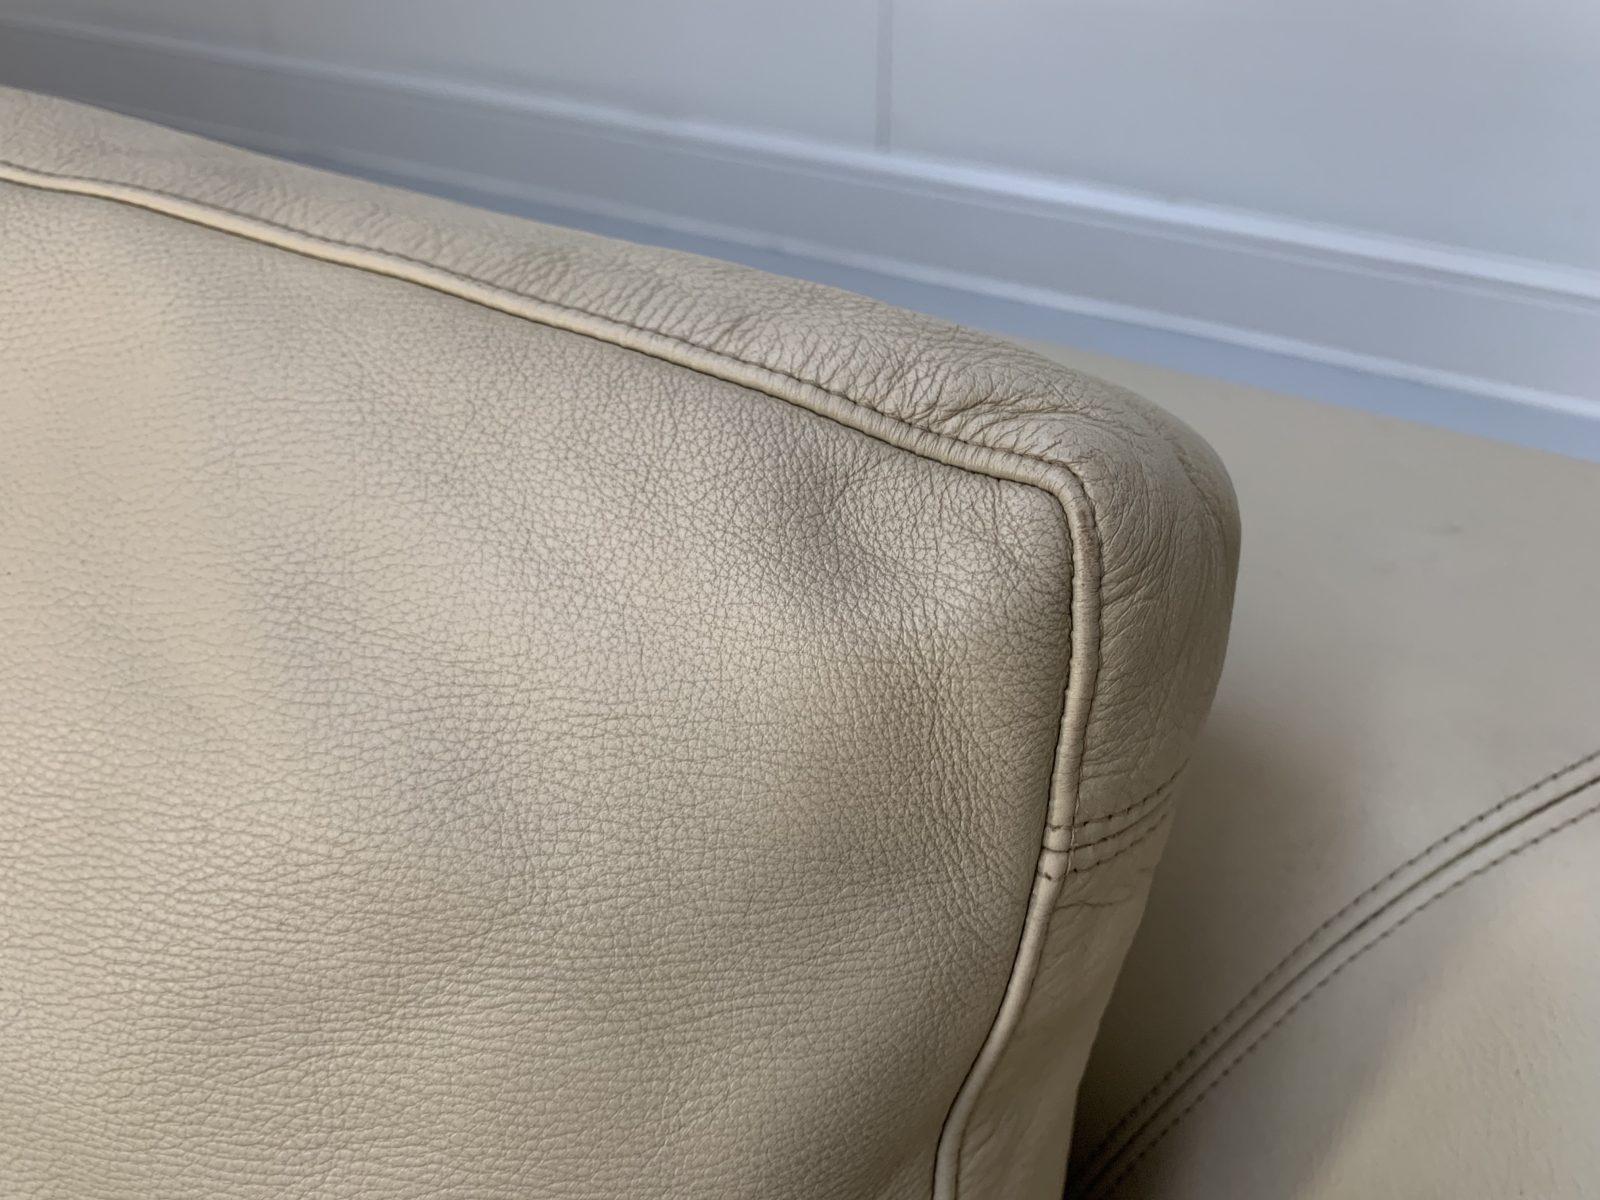 B&B Italia “Charles” L-Shape Sofa, In Cream “Koto” Leather For Sale at ...